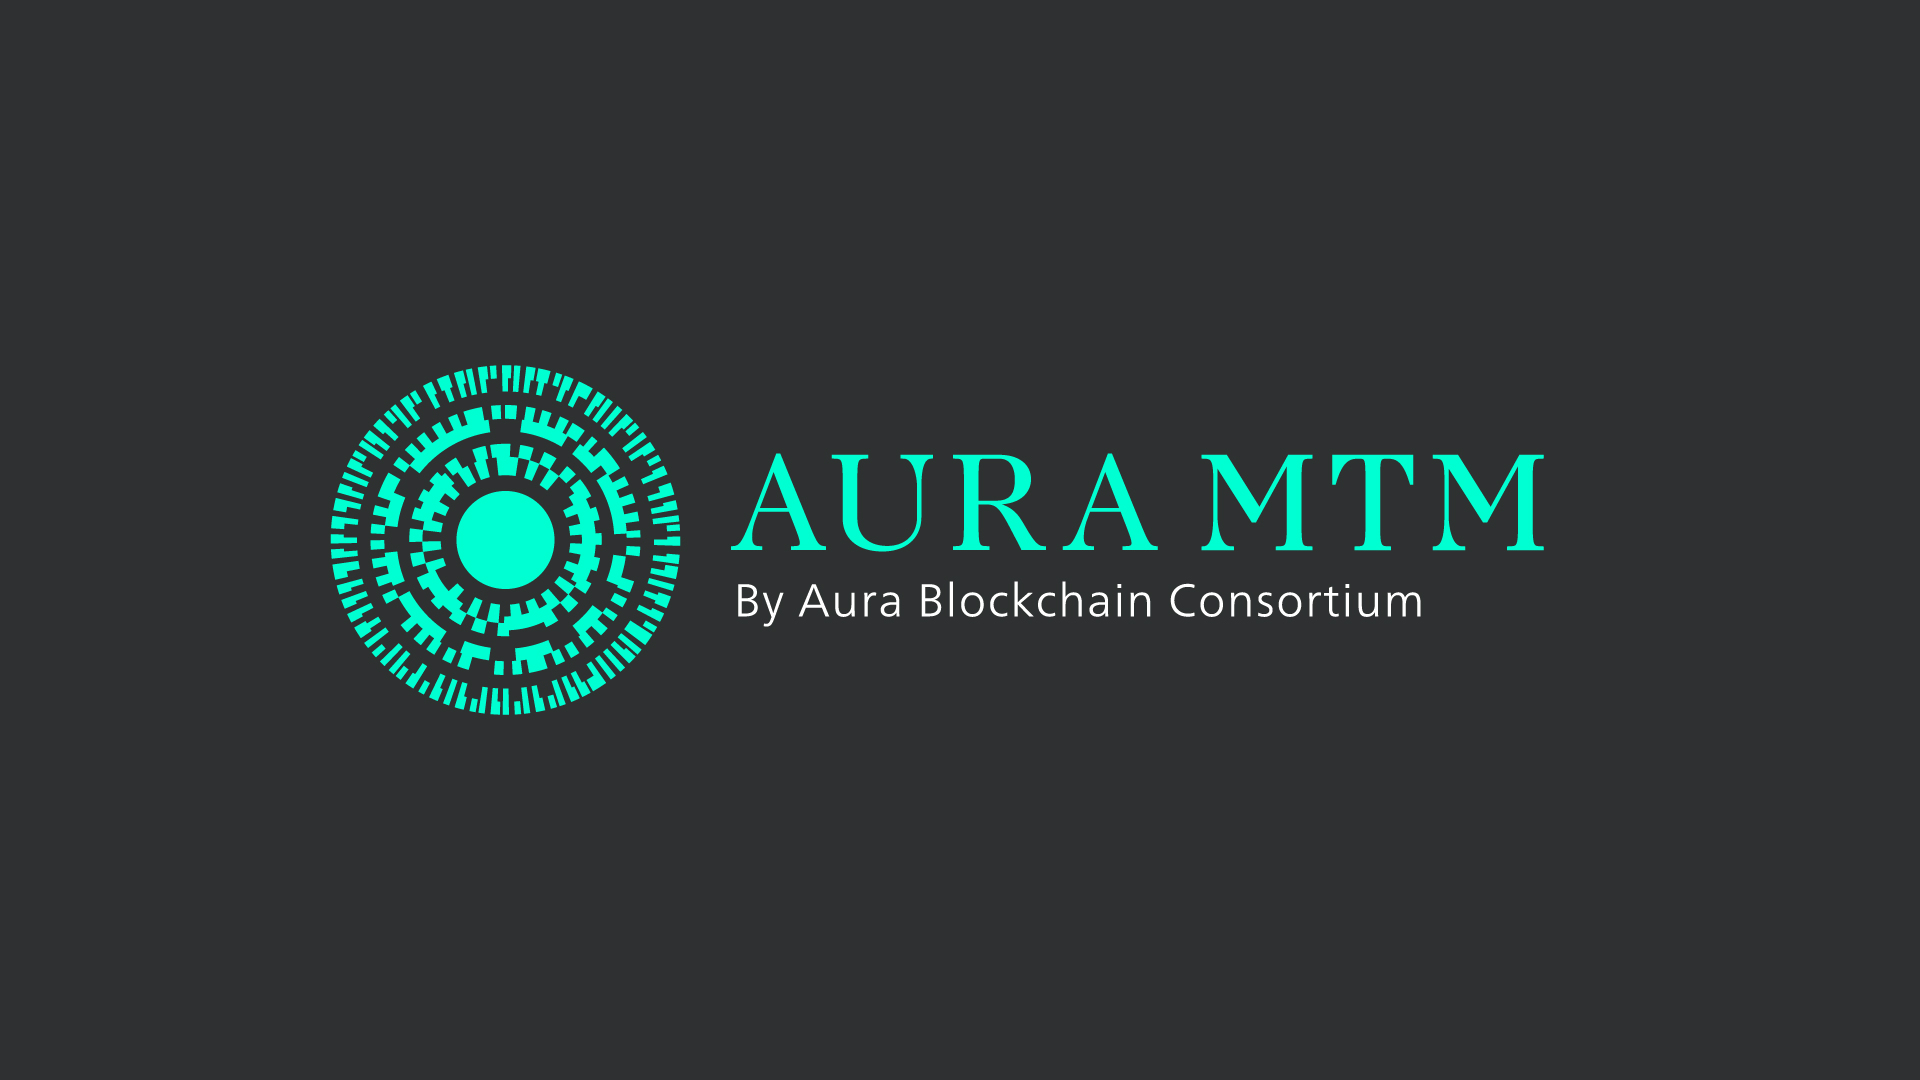 Aura MTM logo